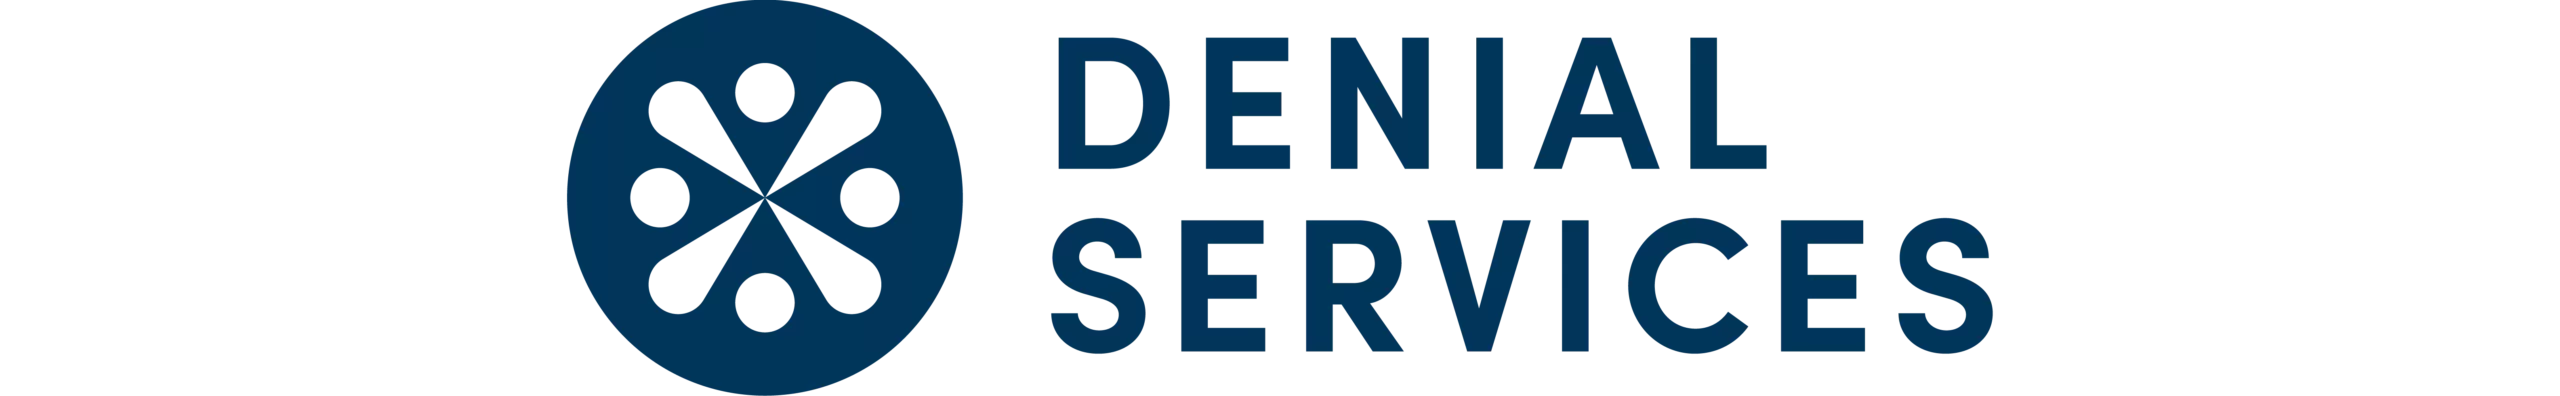 Xsolis Denial Services Logo